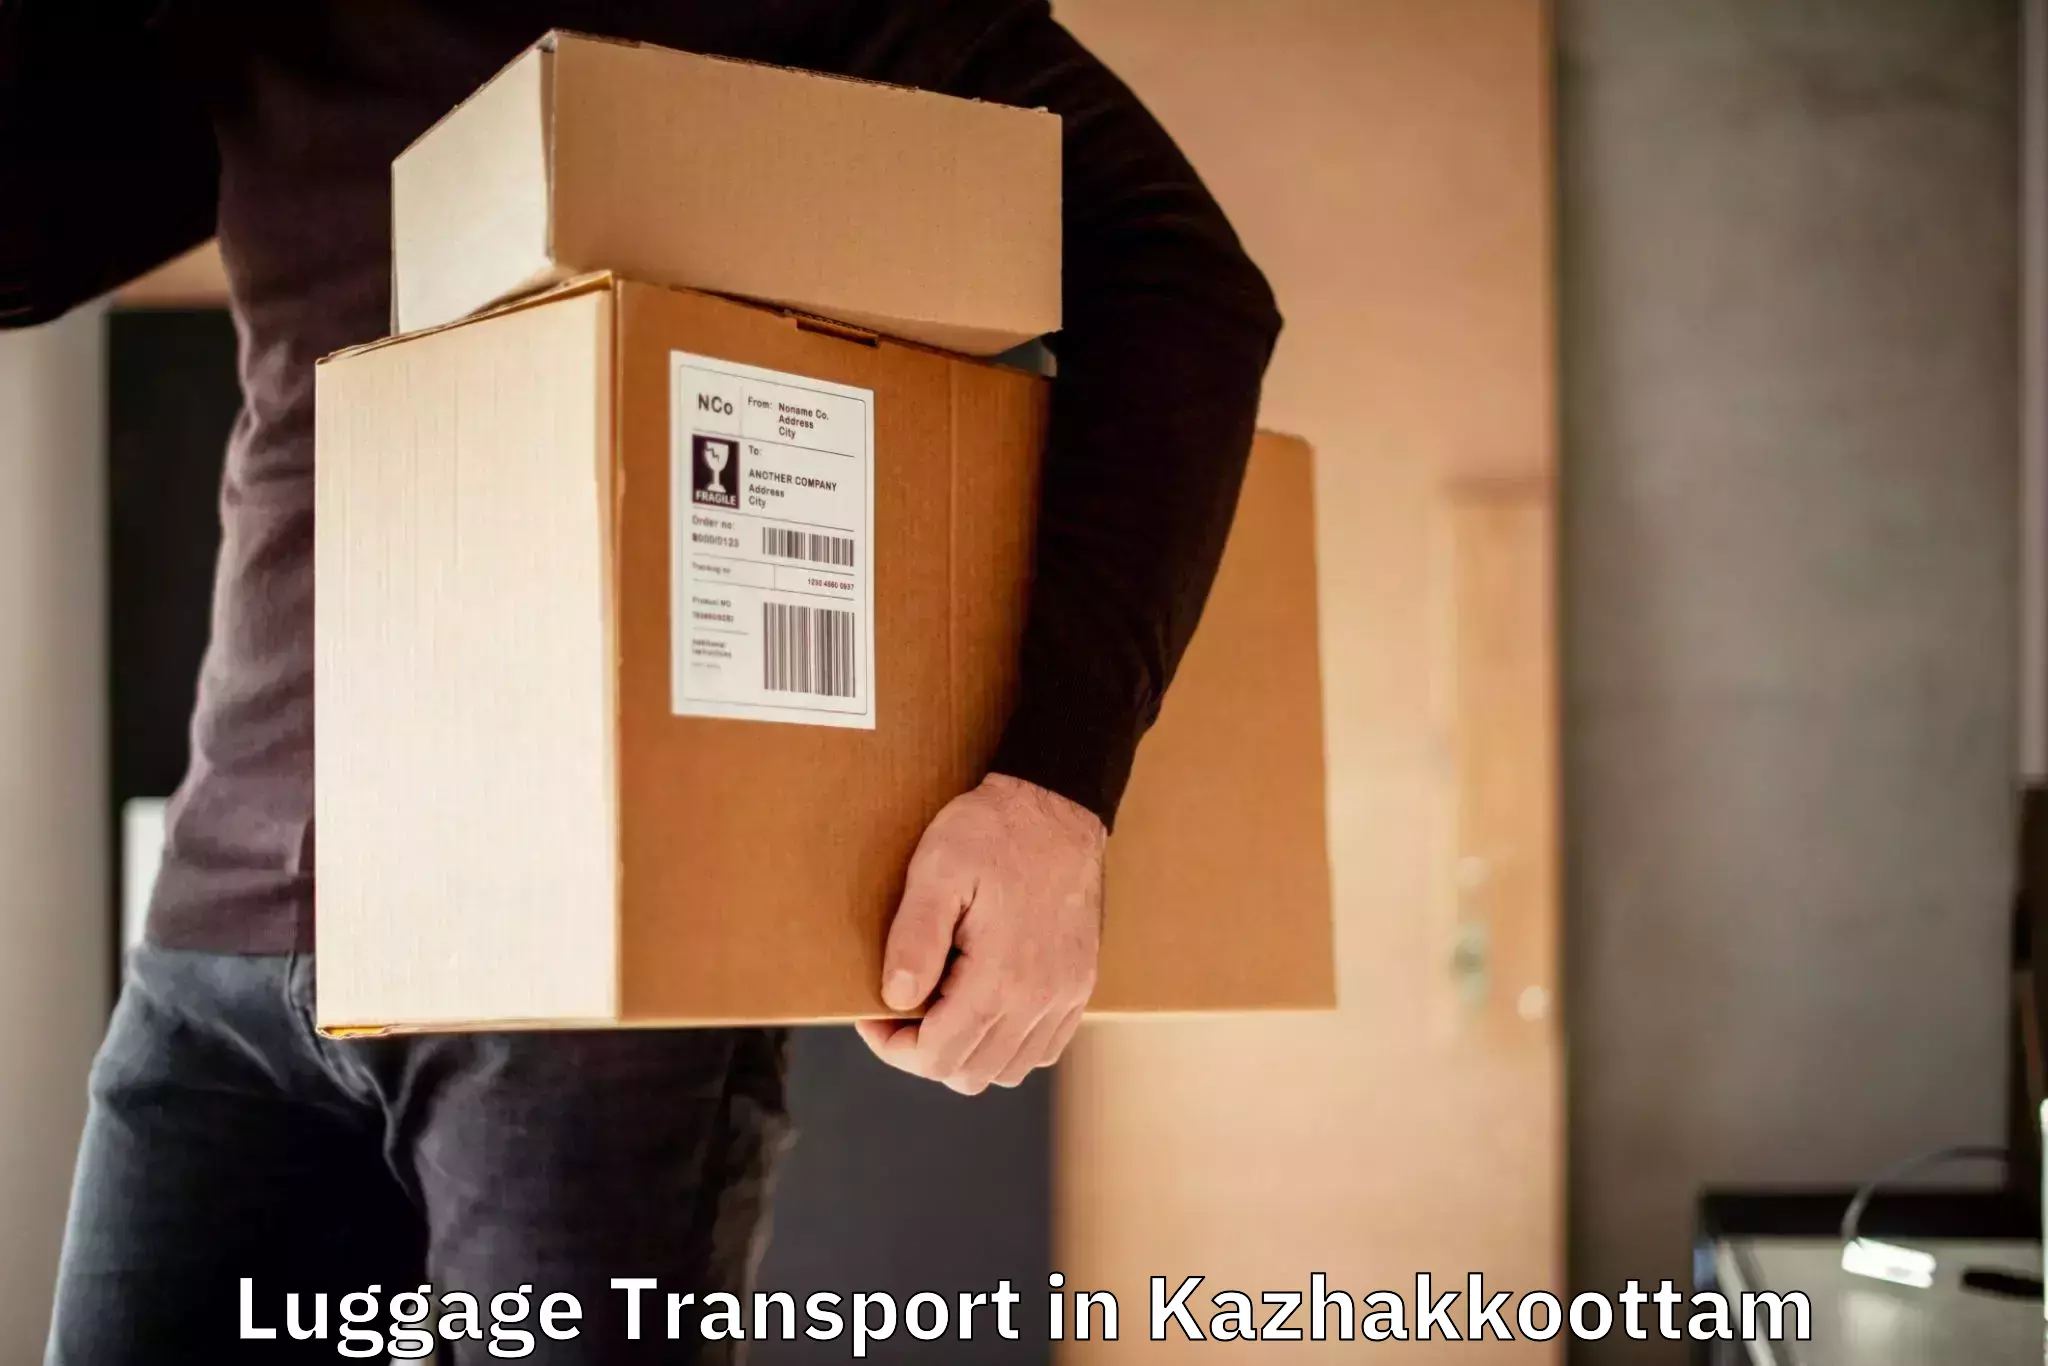 Baggage delivery scheduling in Kazhakkoottam